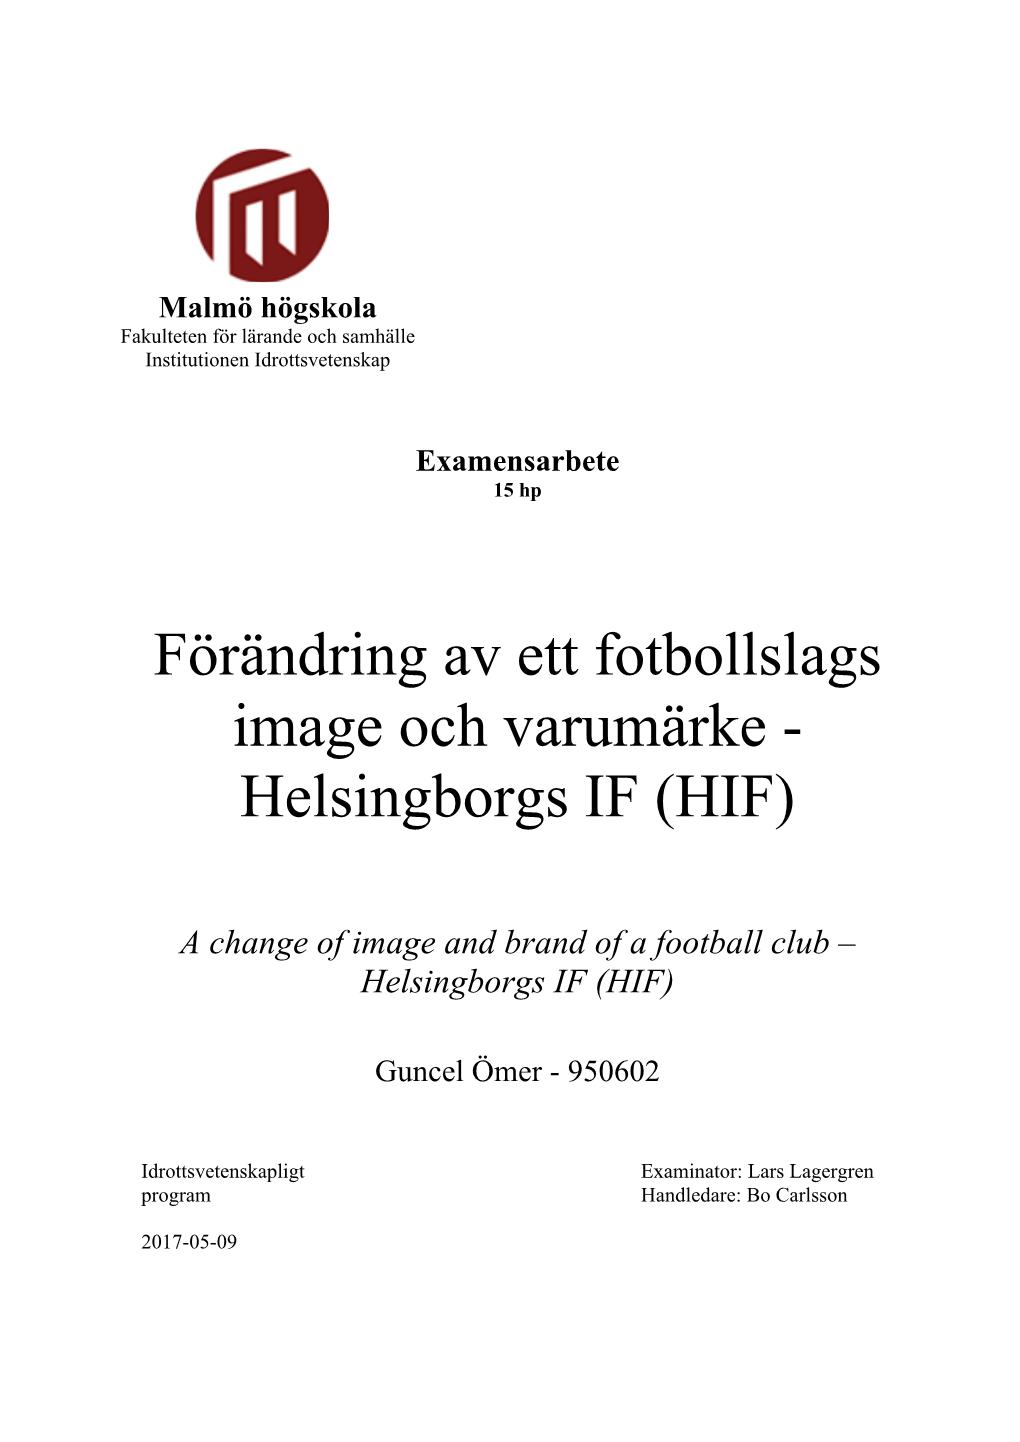 Helsingborgs IF (HIF)